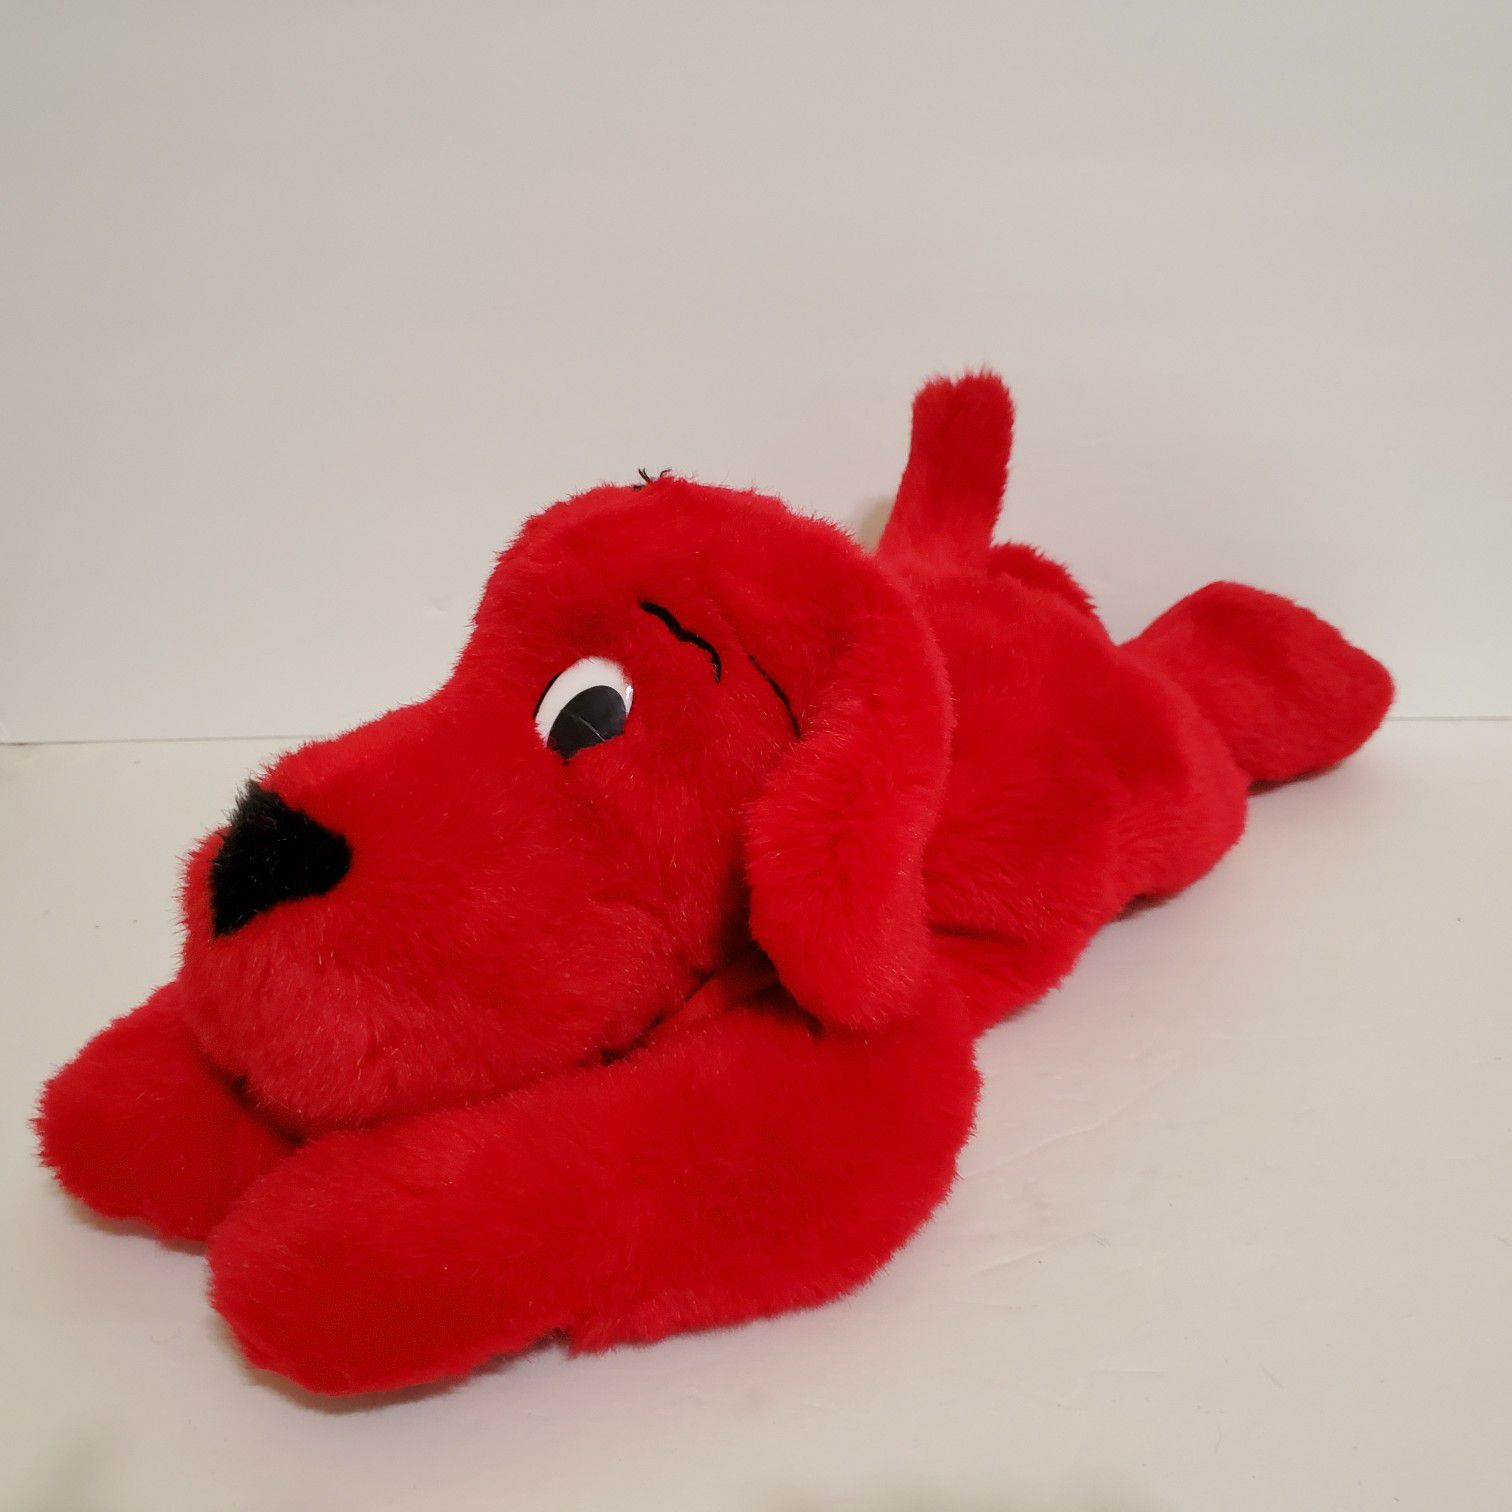 Clifford The Big Red Dog 20" Stuffed Animal Plush Scholastic Side Kicks Floppy